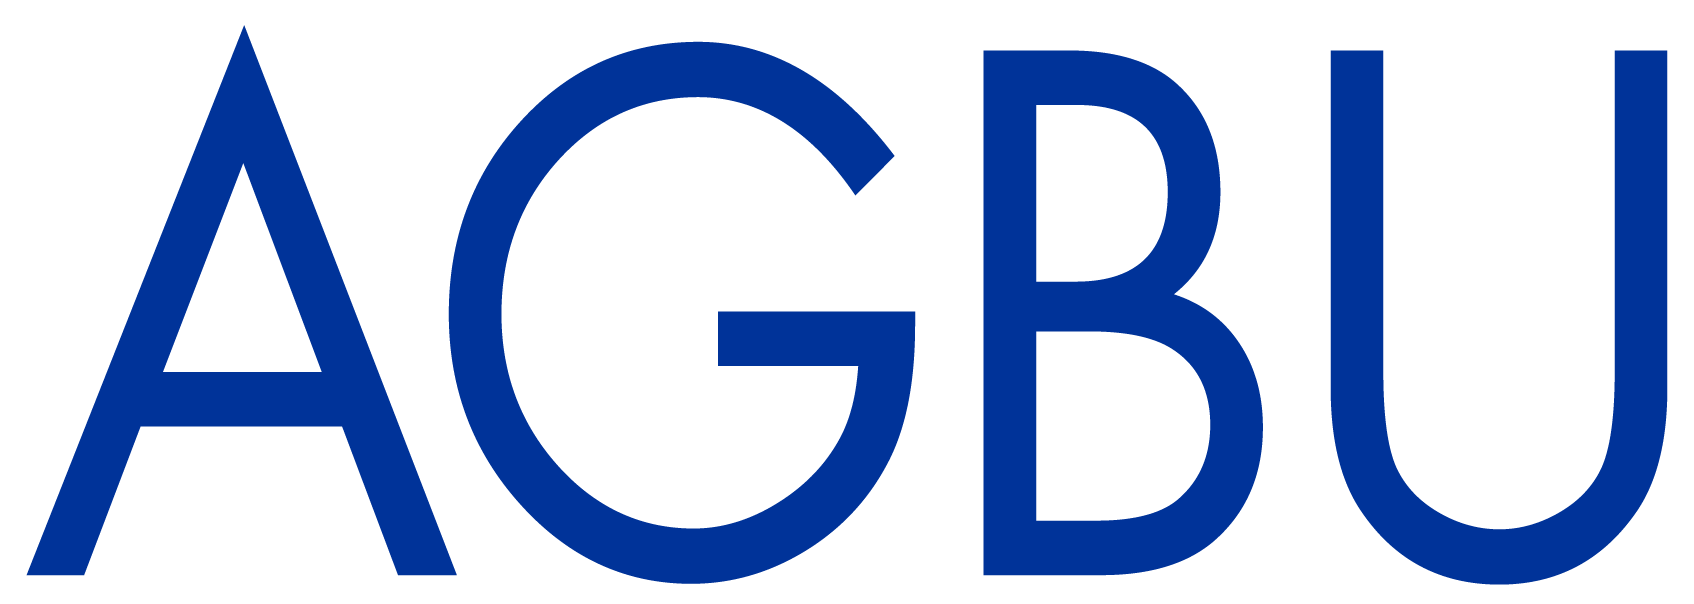 agbu-logo-blue.png